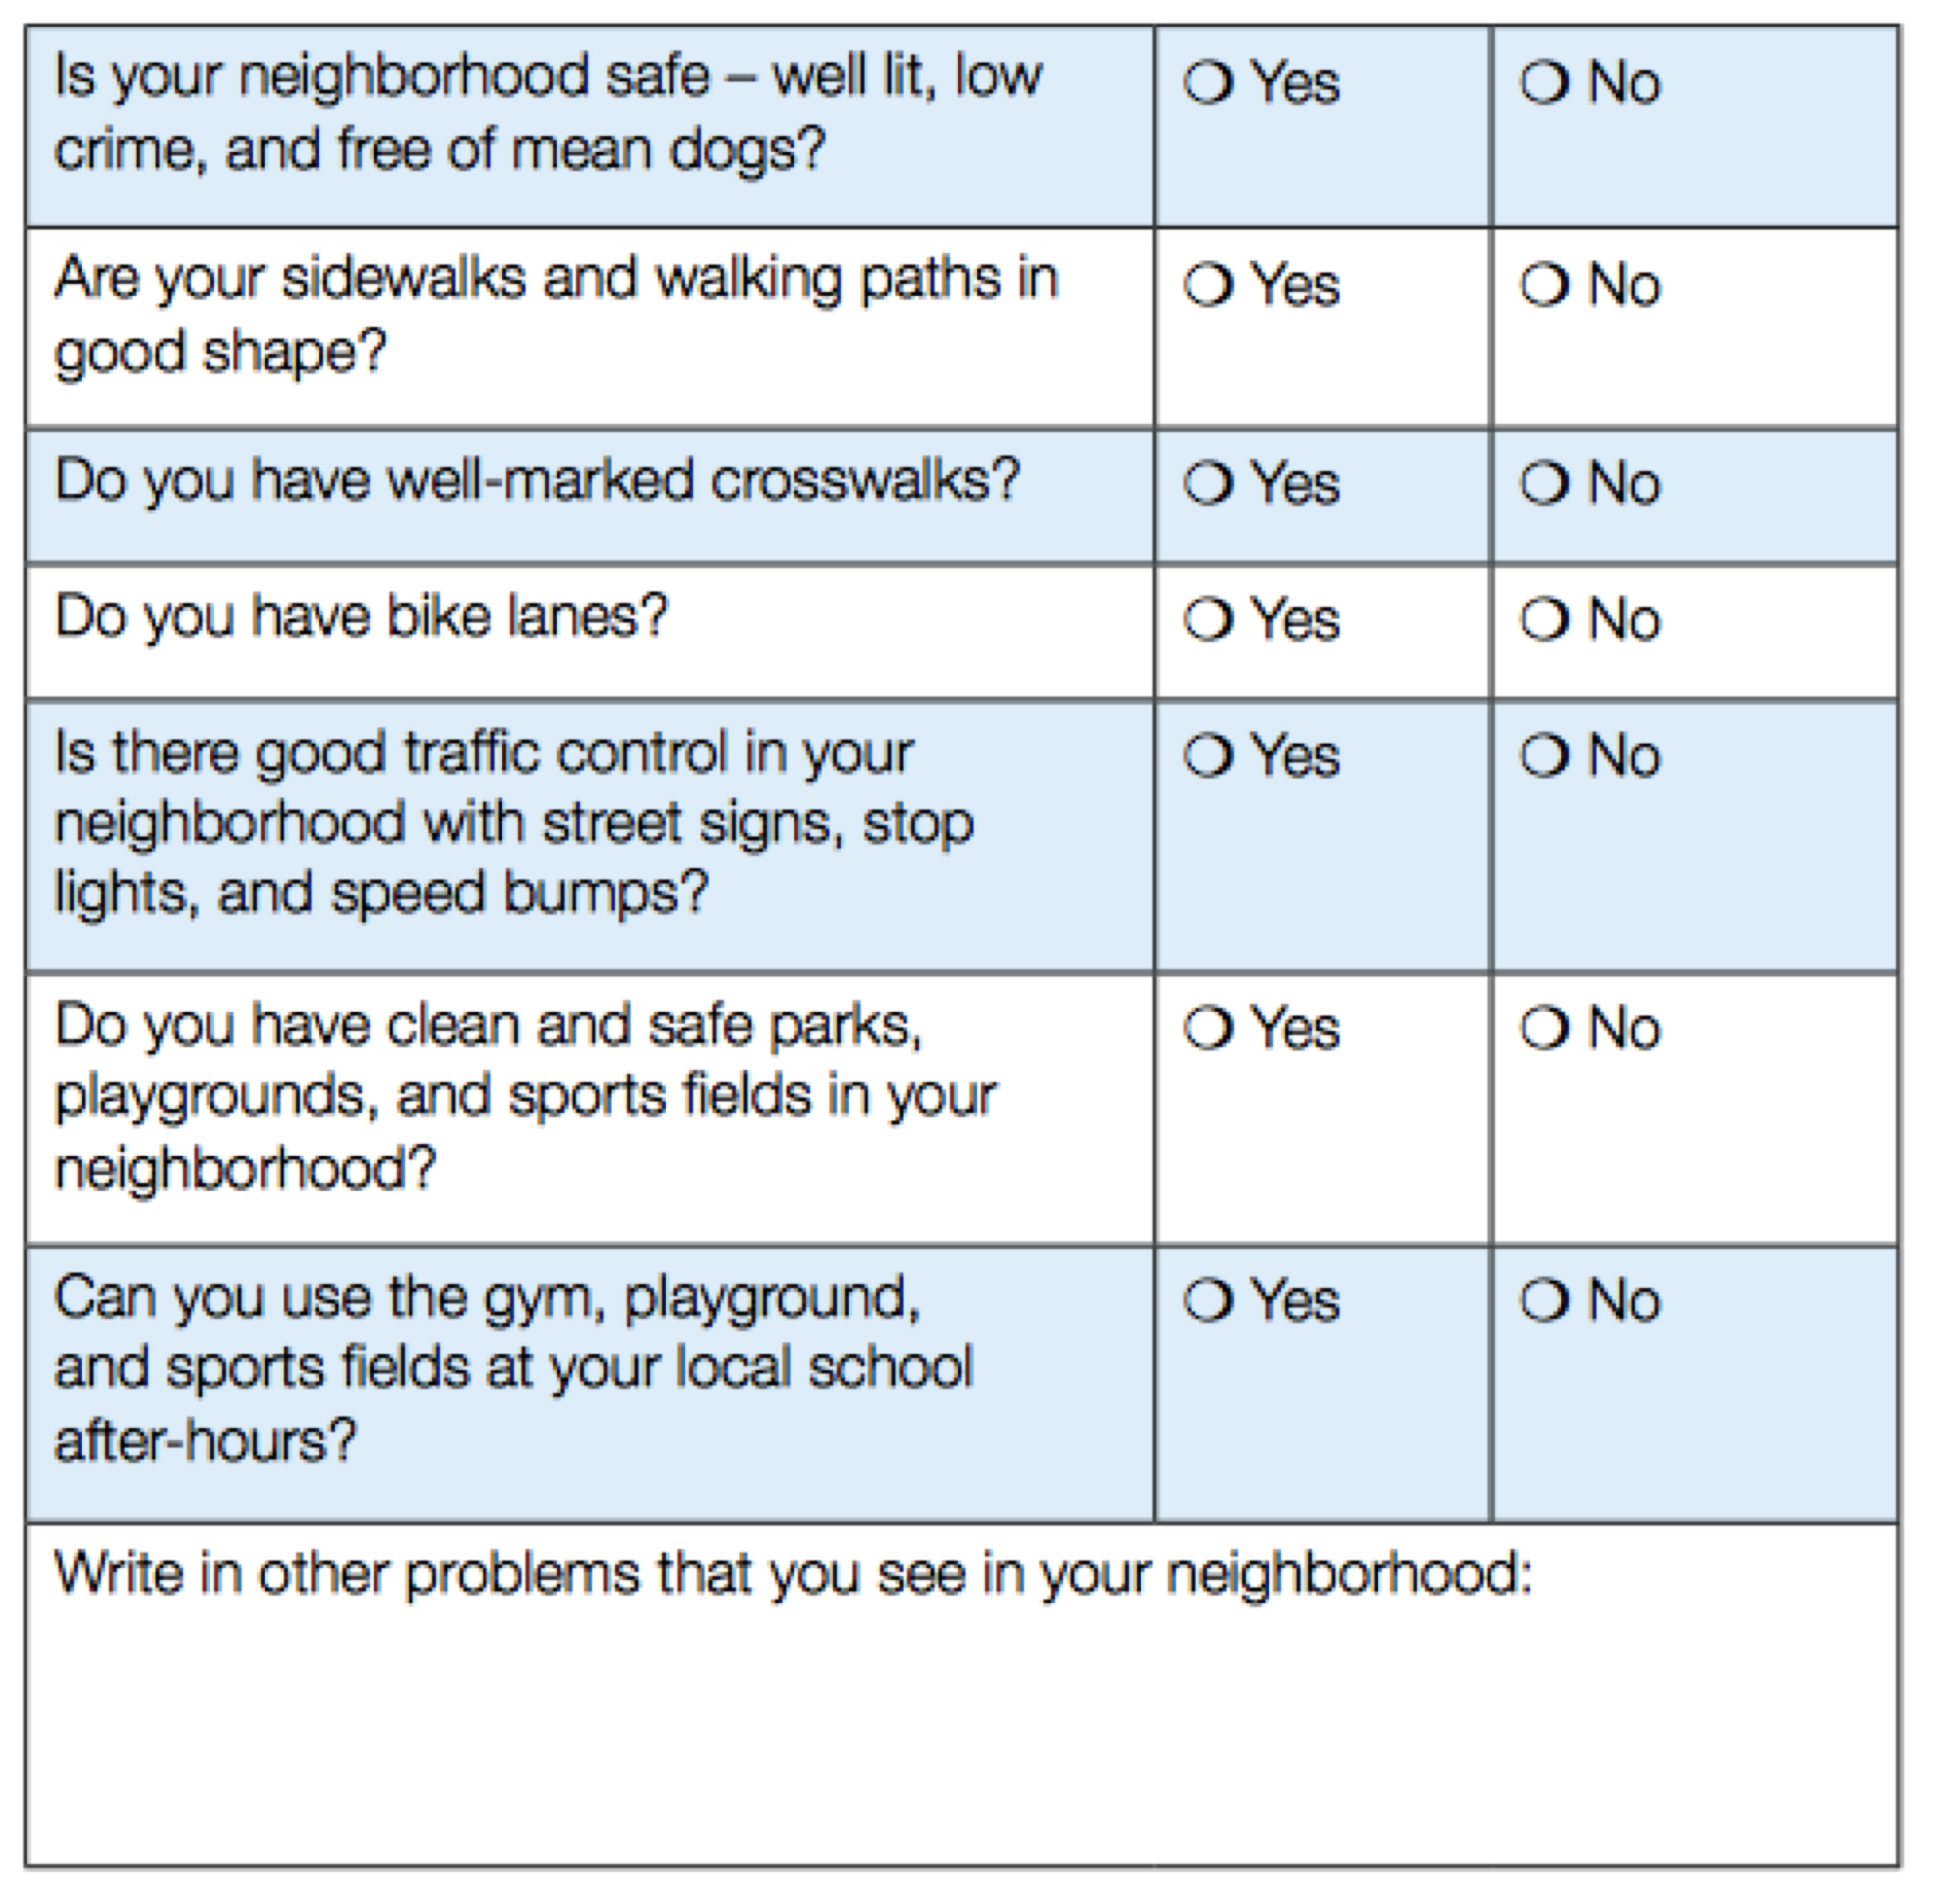 An image of a neighborhood checklist